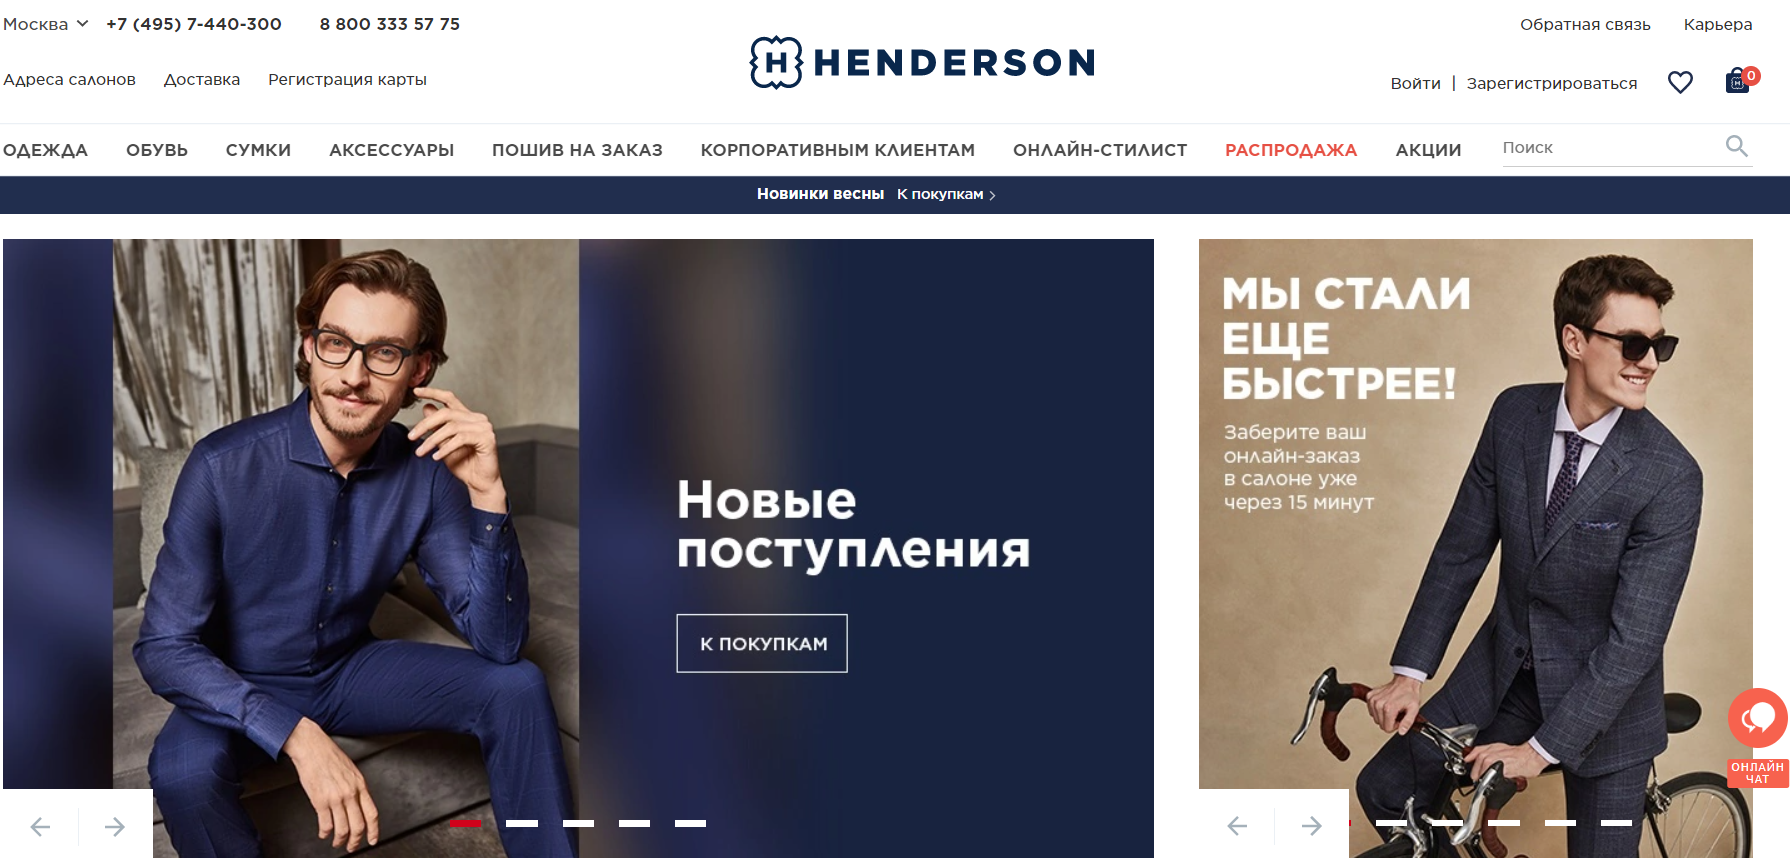 HENDERSON официальный сайт интернет-магазина